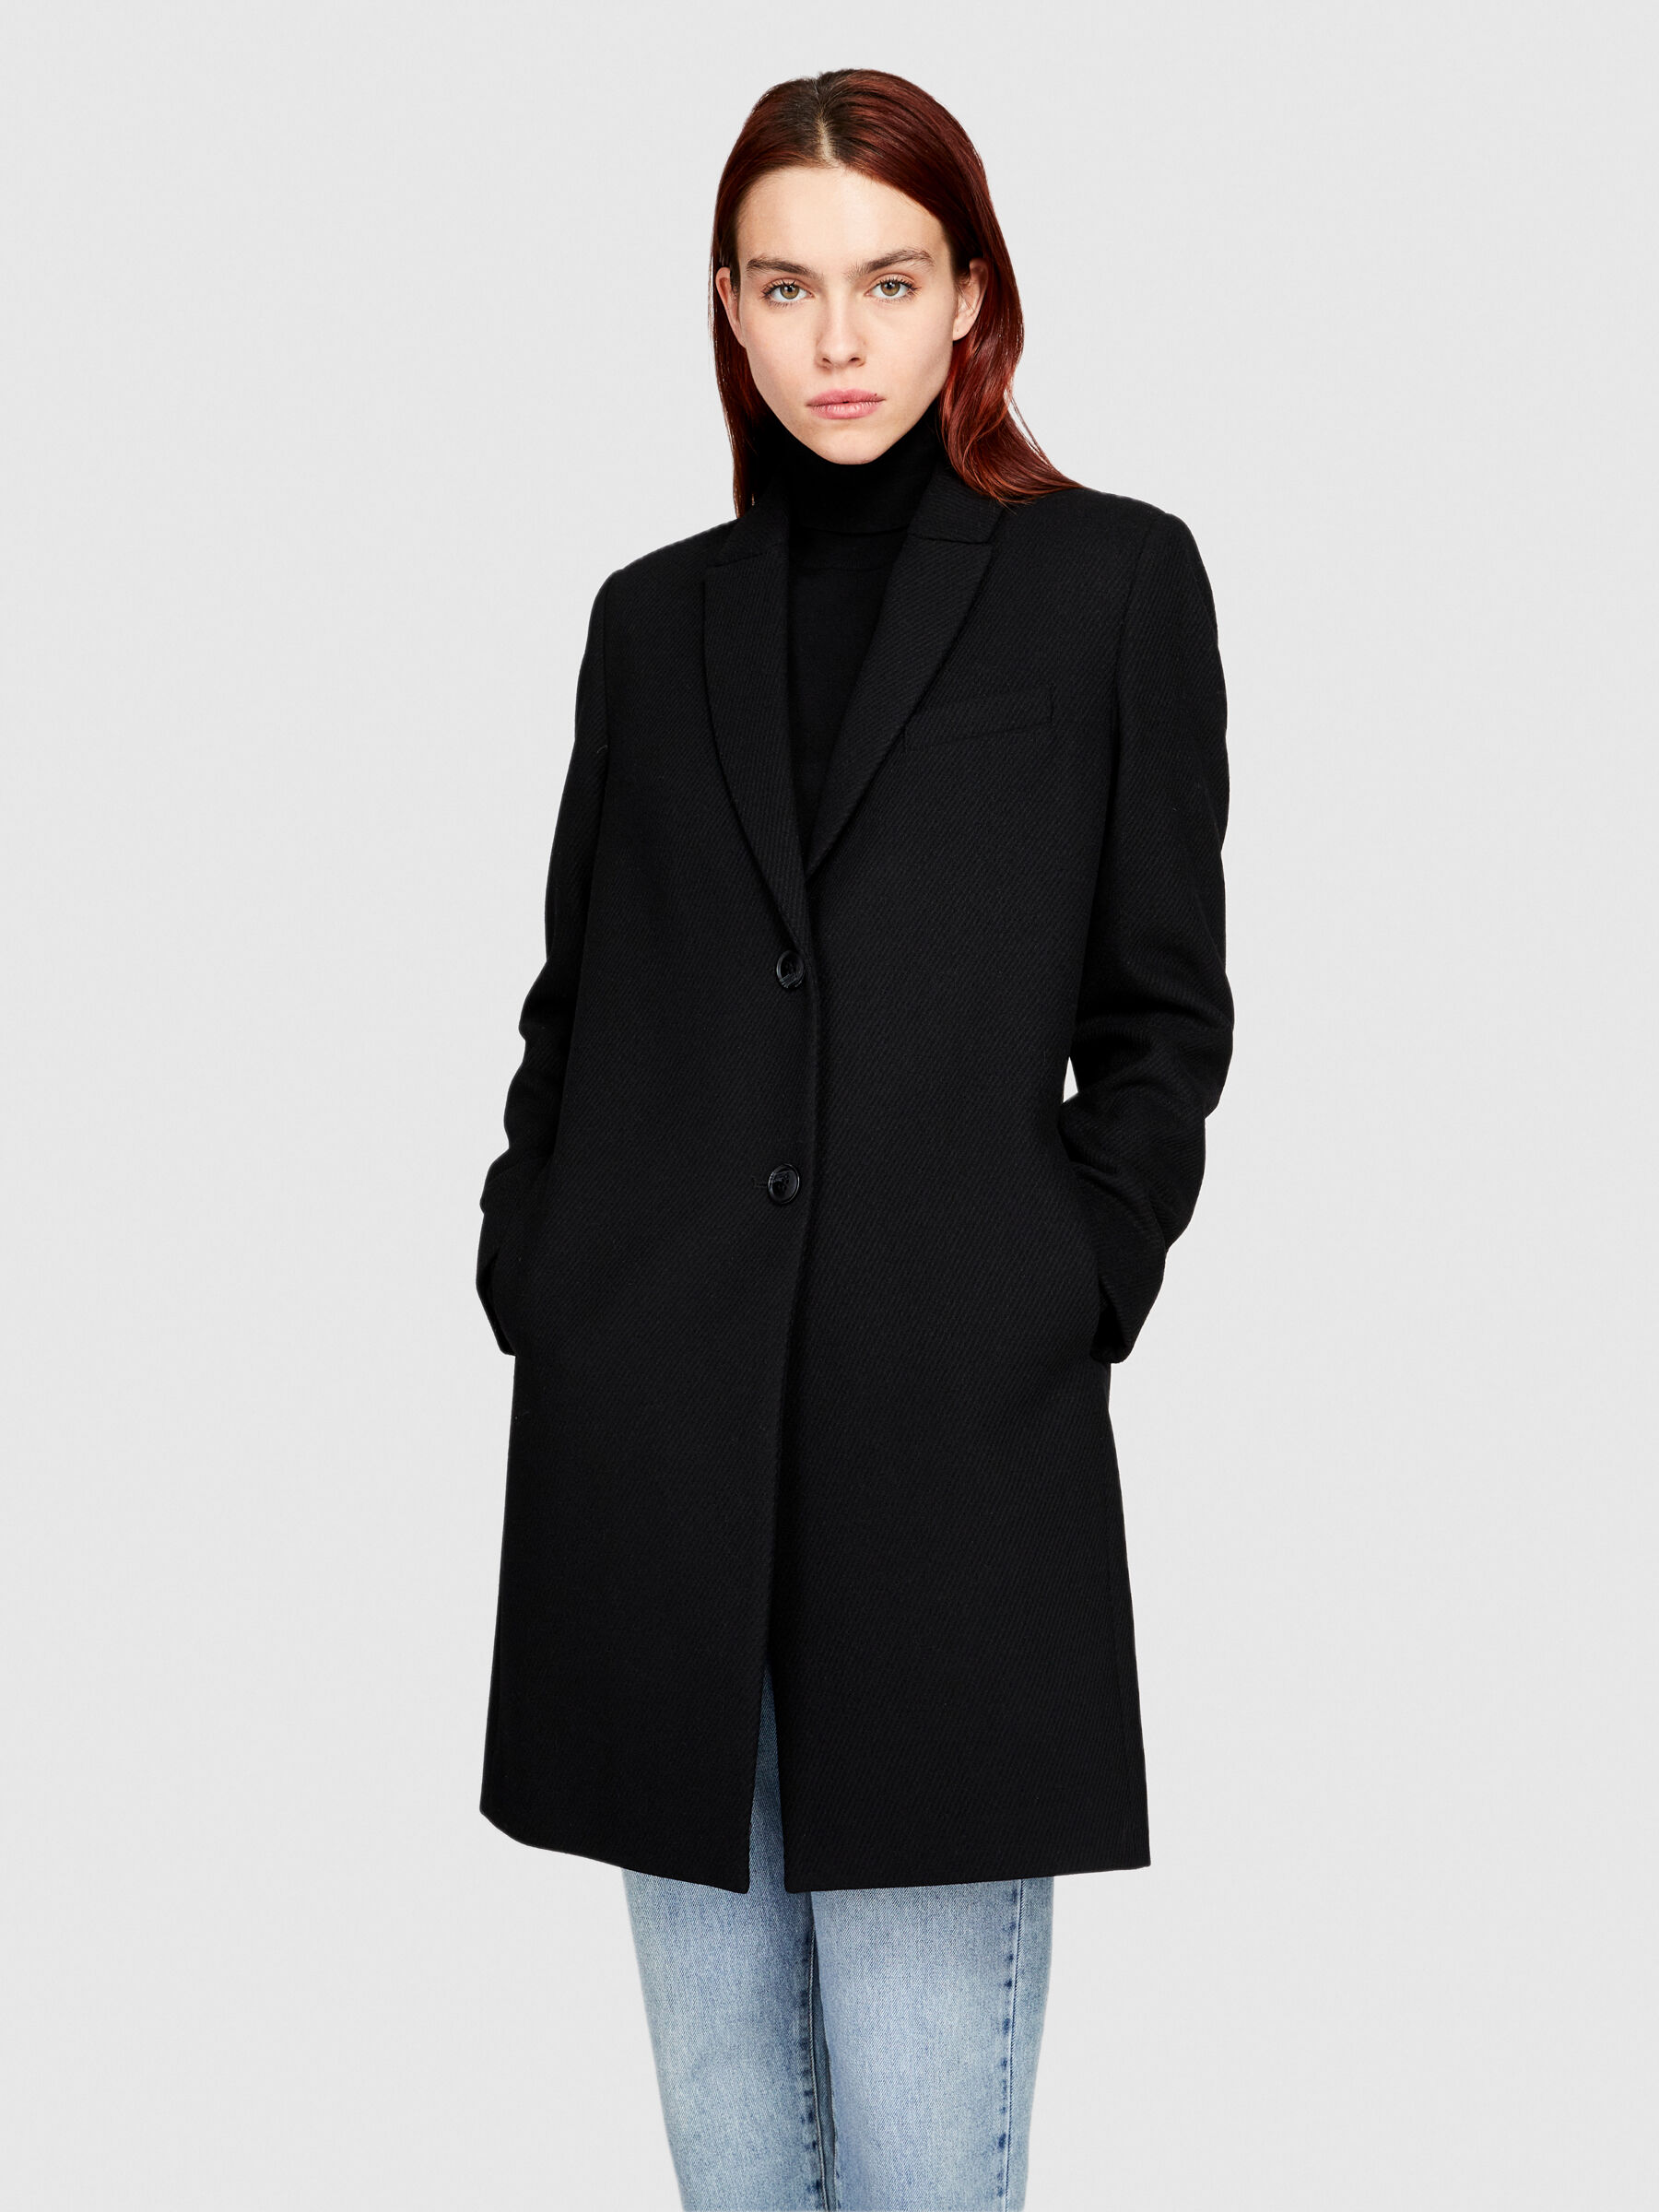 We11done Black Shirring Single-Breasted Coat